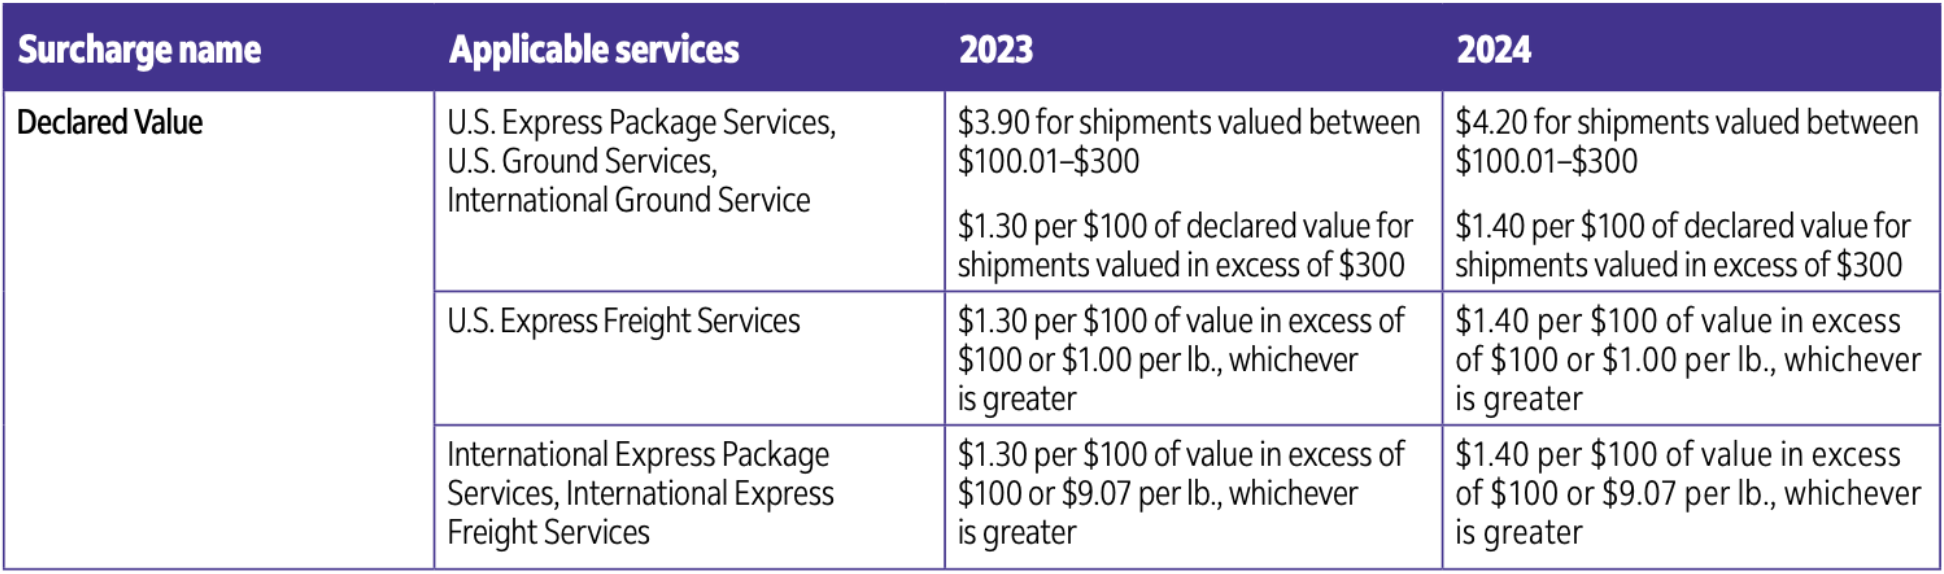 declared value for FedEx insurance for 2024